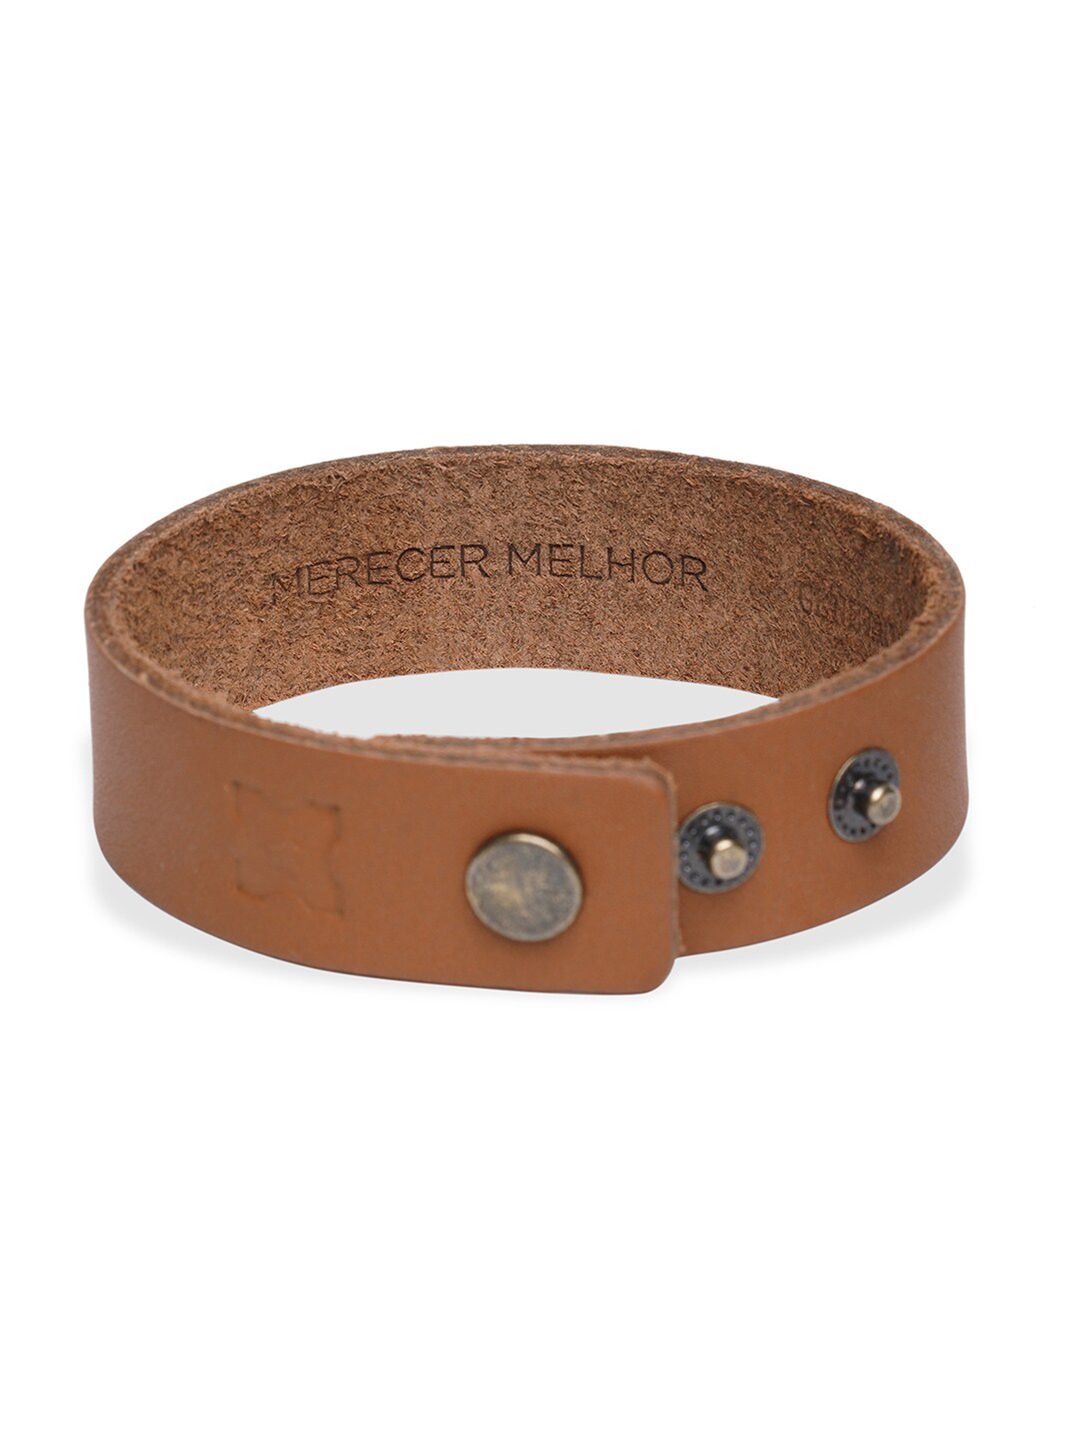 MERECER MELHOR Unisex Brown Leather Handcrafted Wraparound Bracelet Price in India